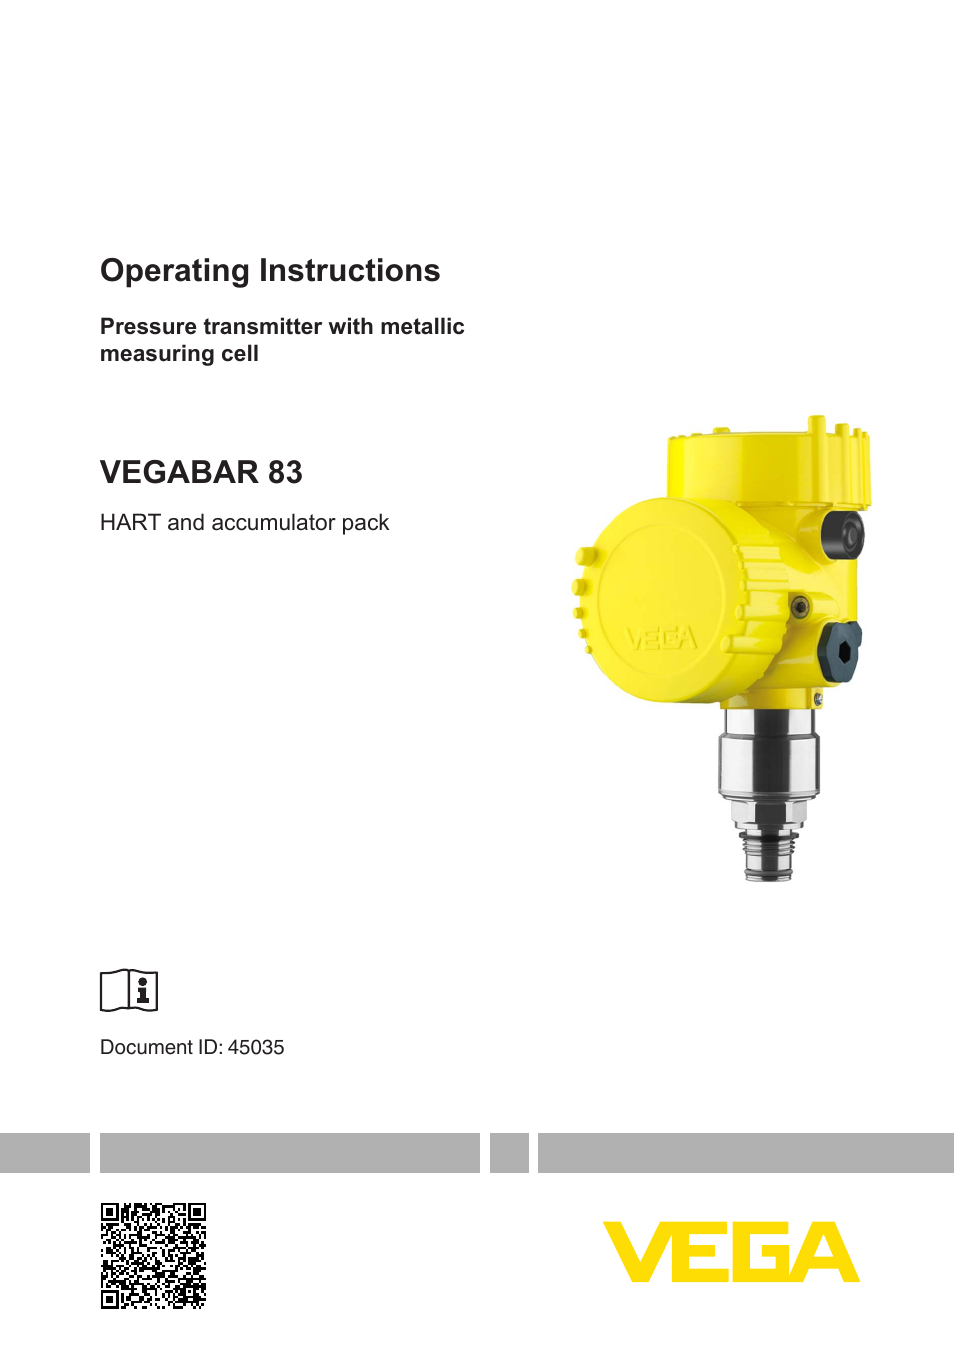 VEGABAR 83 HART and accumulator pack - Operating Instructions